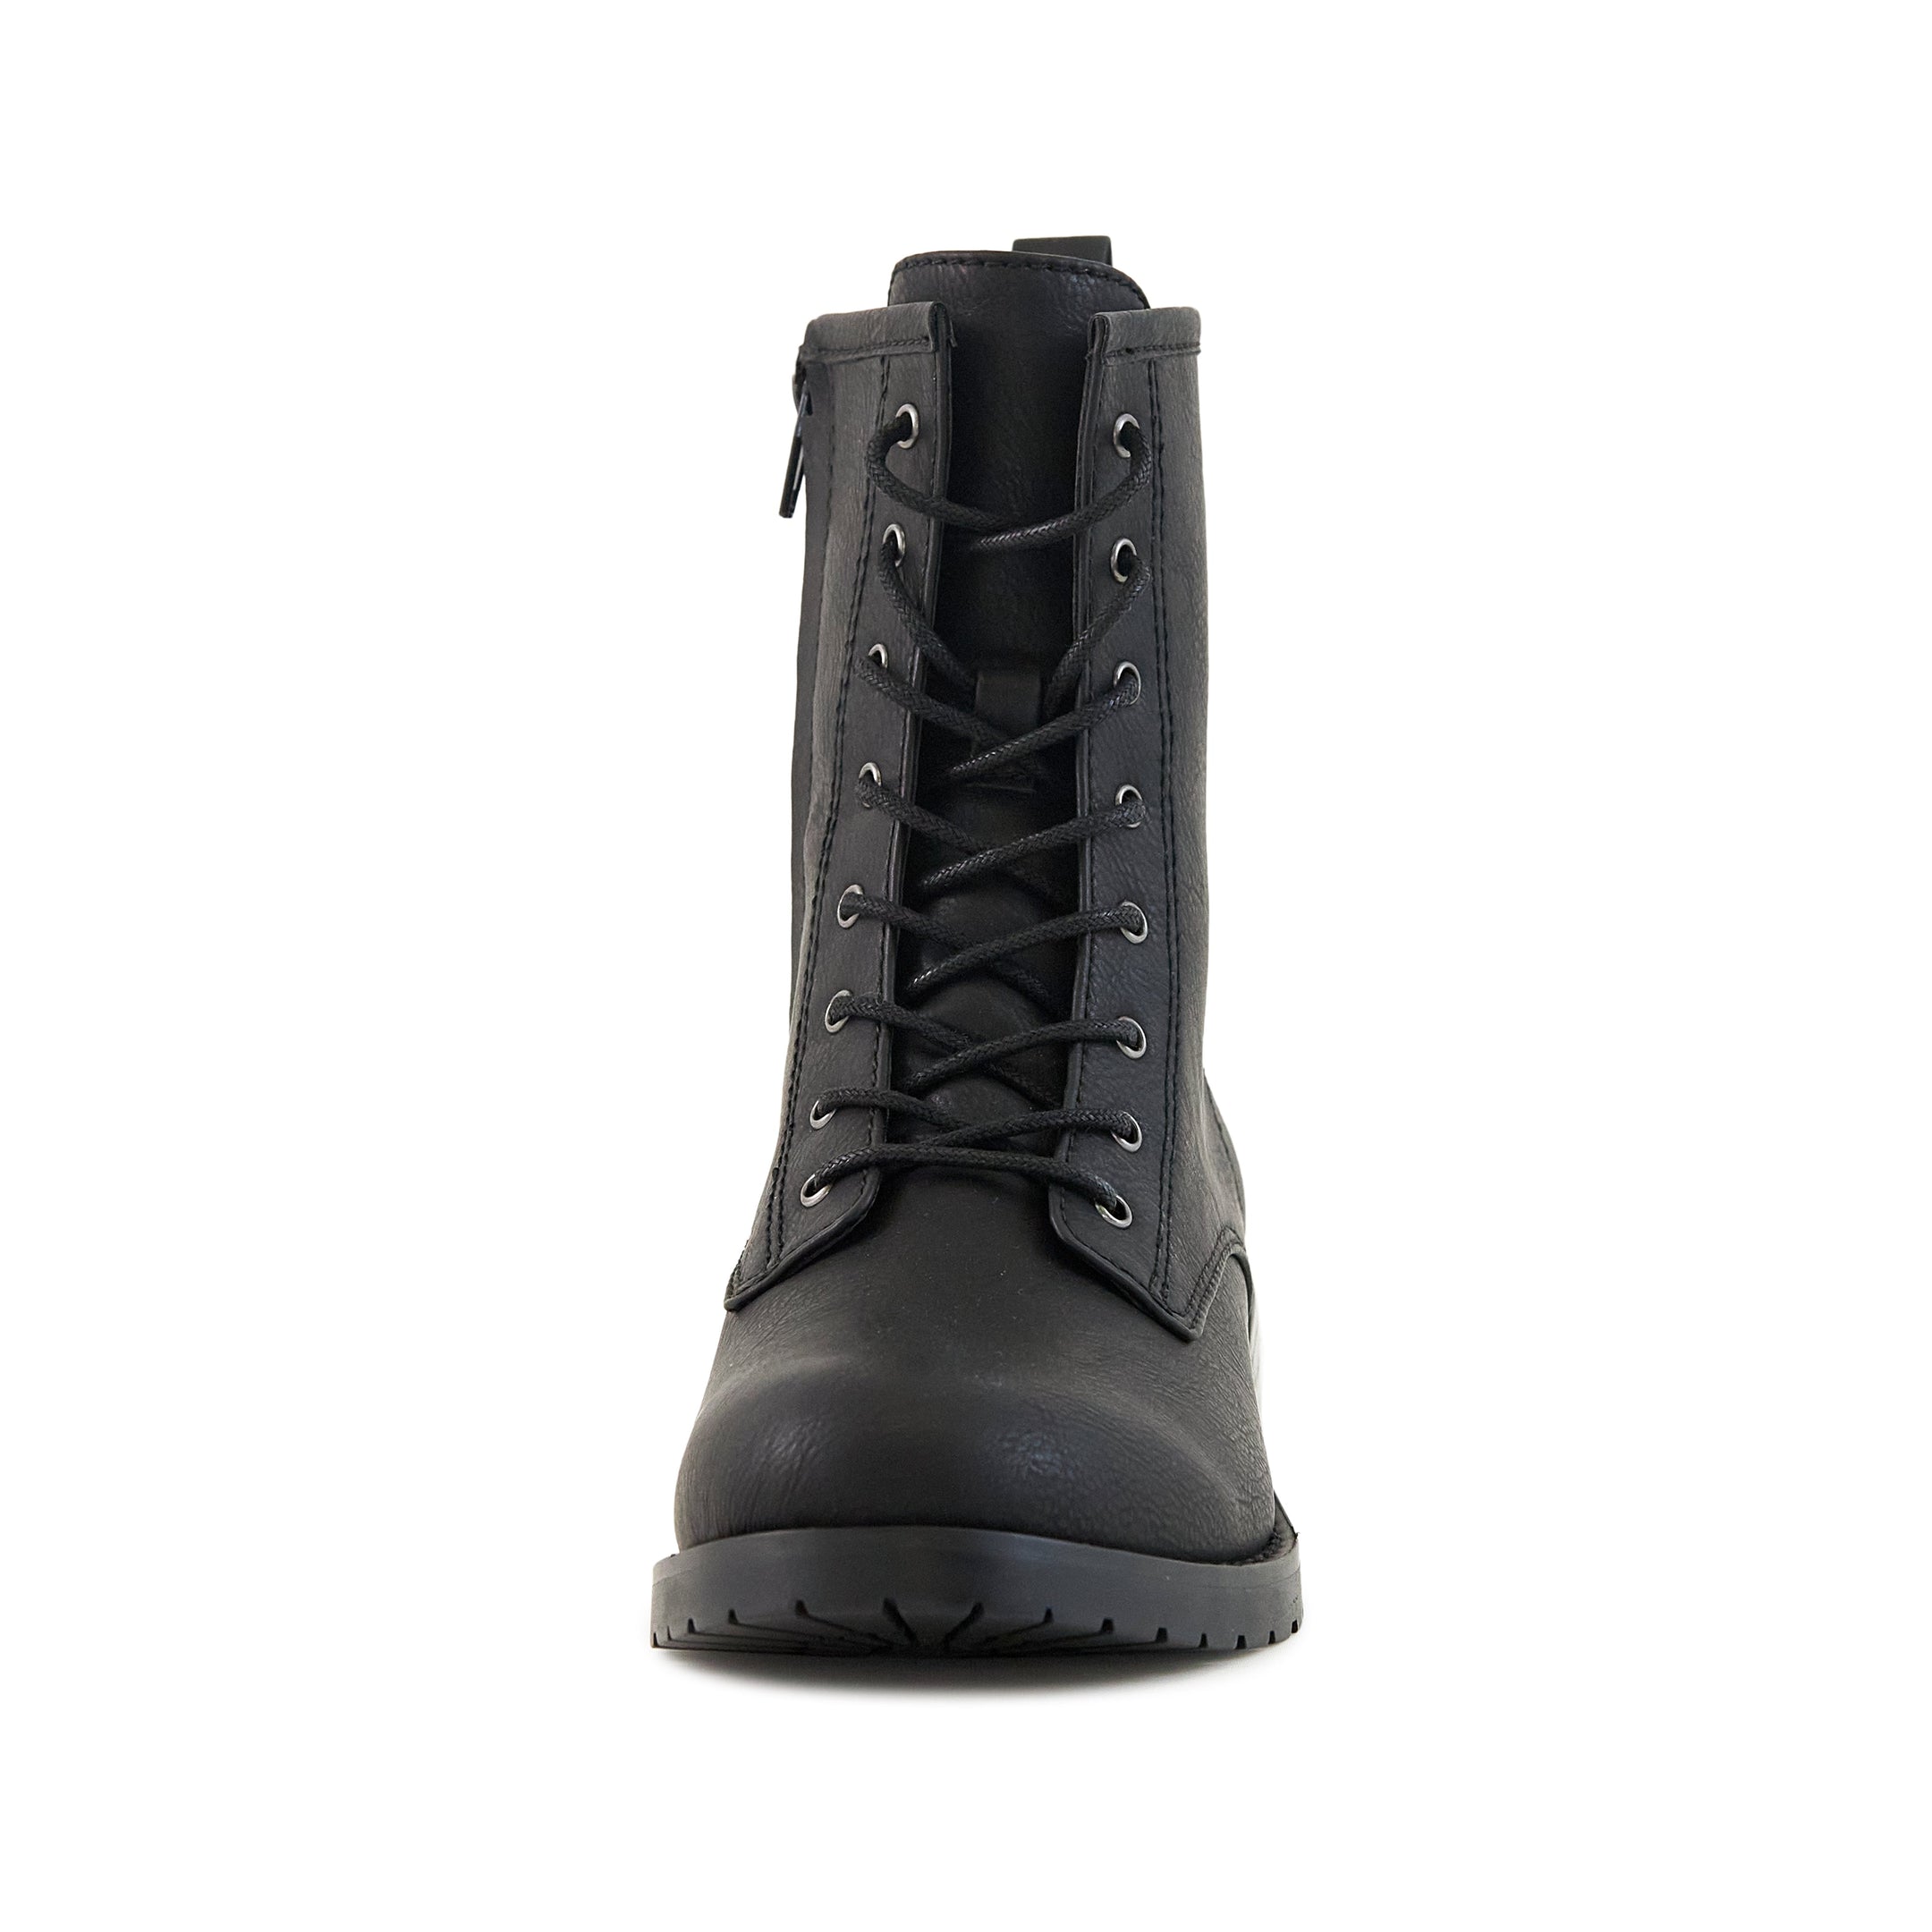 Buy Women's Combat Boots Black by Nest Shoes